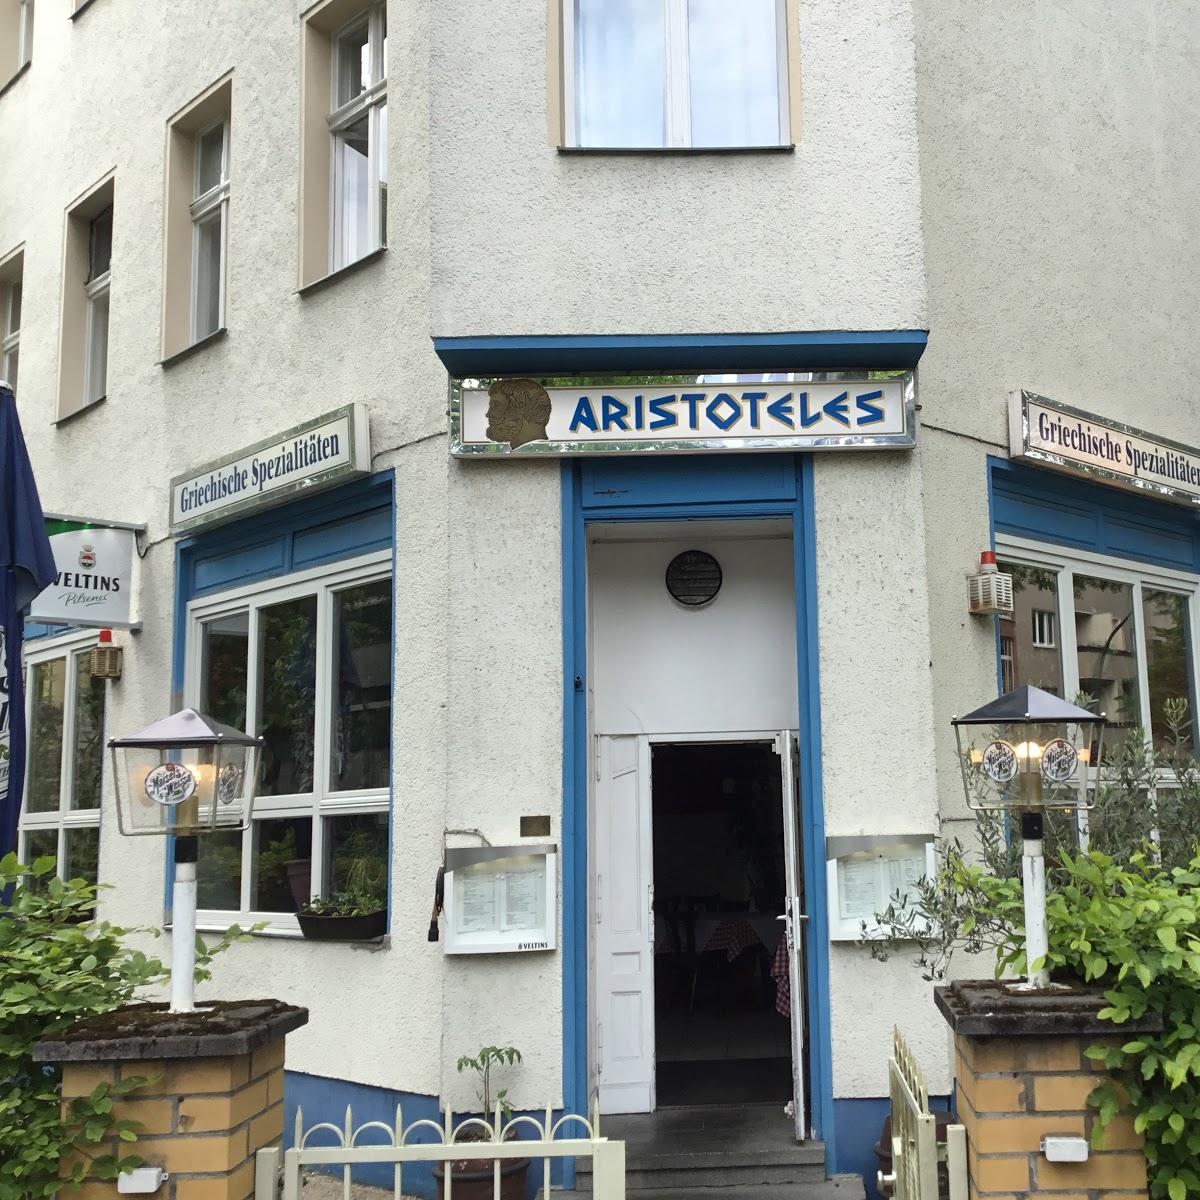 Restaurant "Restaurant Aristoteles" in  Berlin